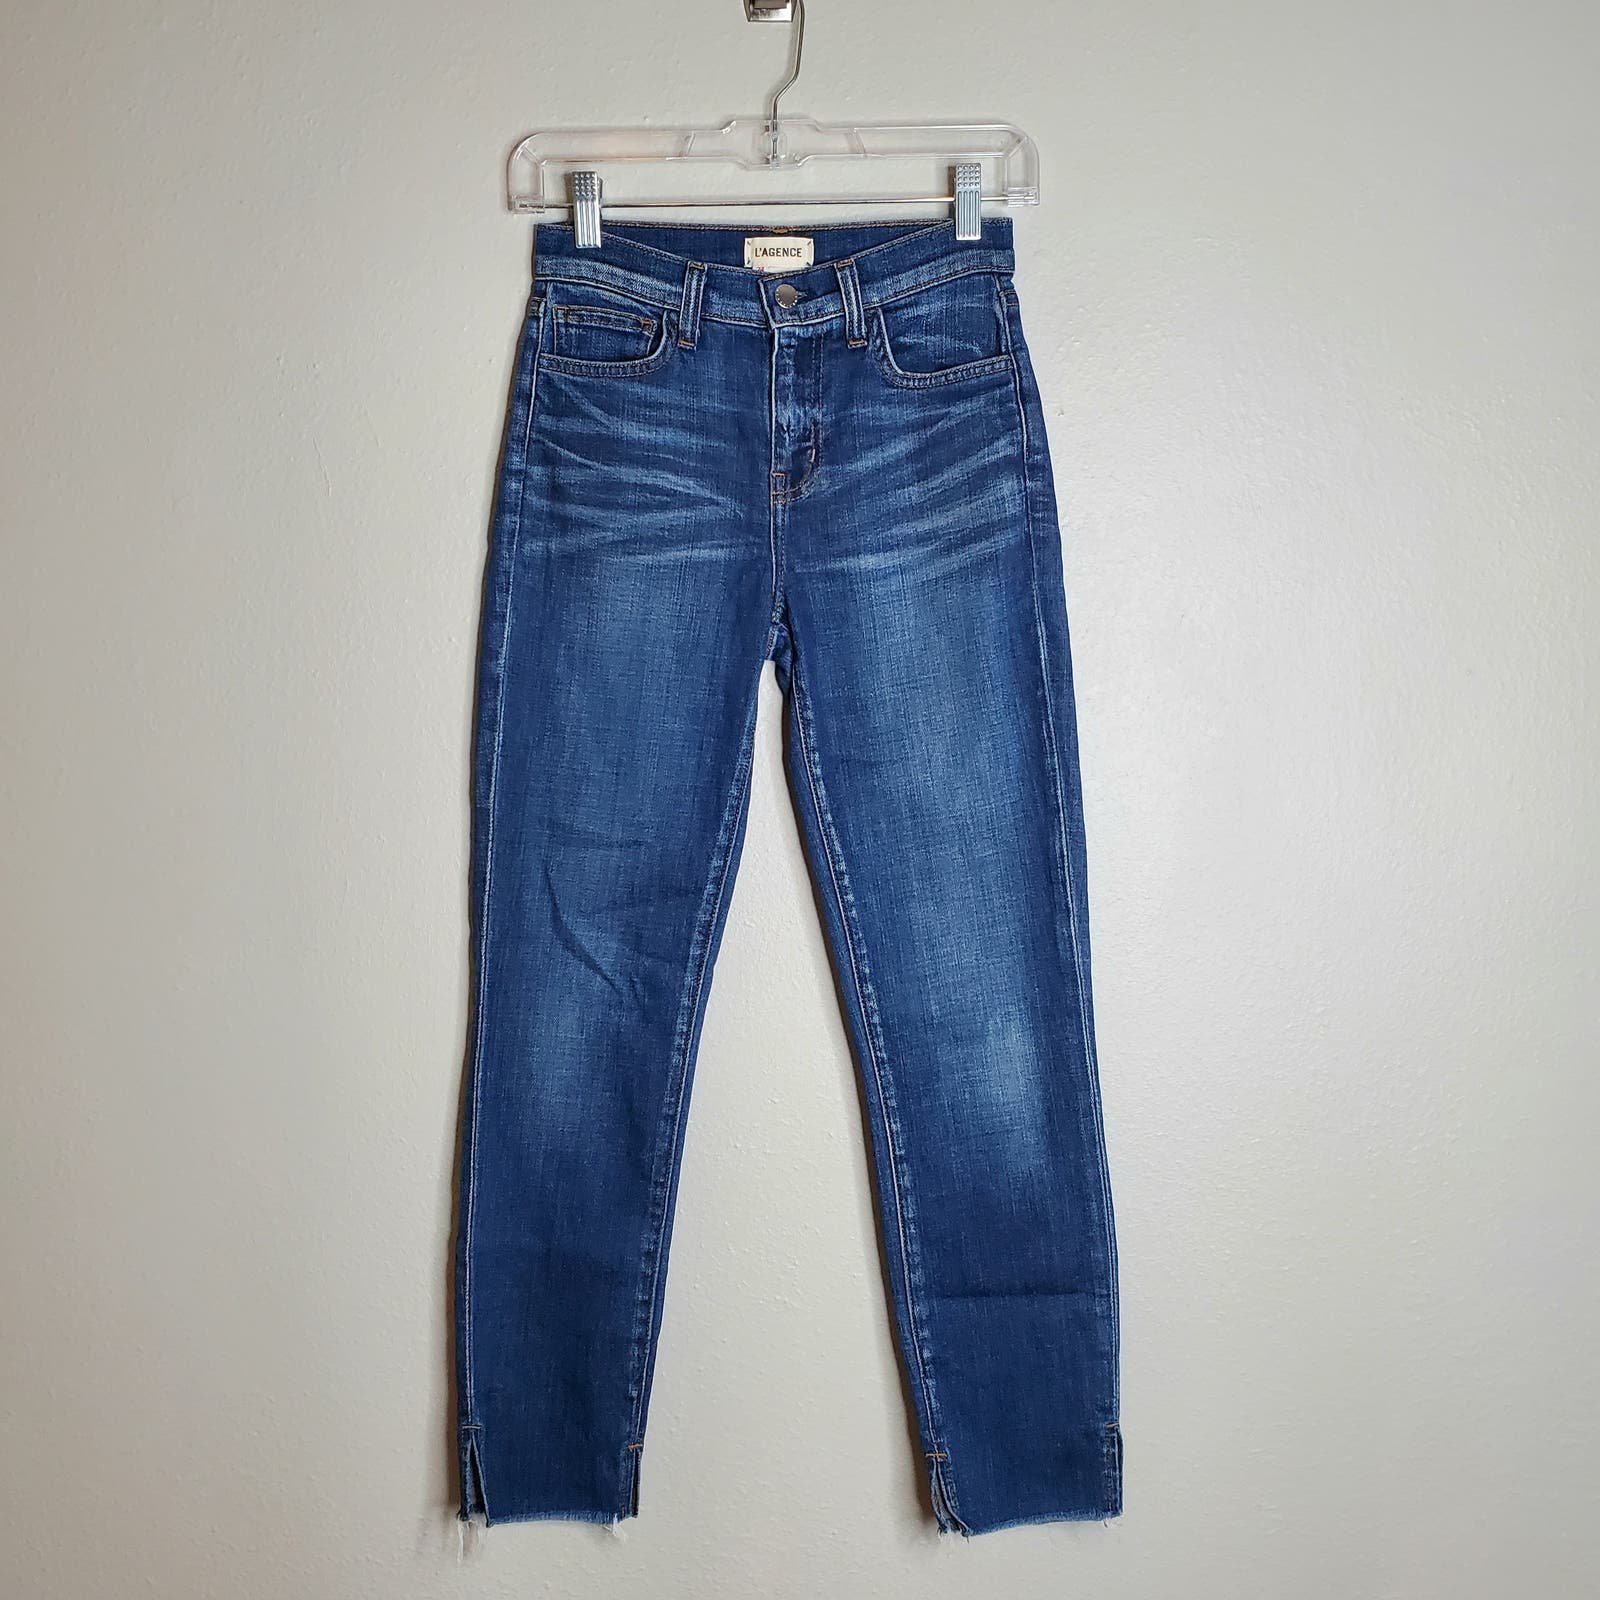 Fashion L´Agence Nicoline Slim High Rise Jeans Diamond Wash Size 24 jC7Yhpl0a Low Price